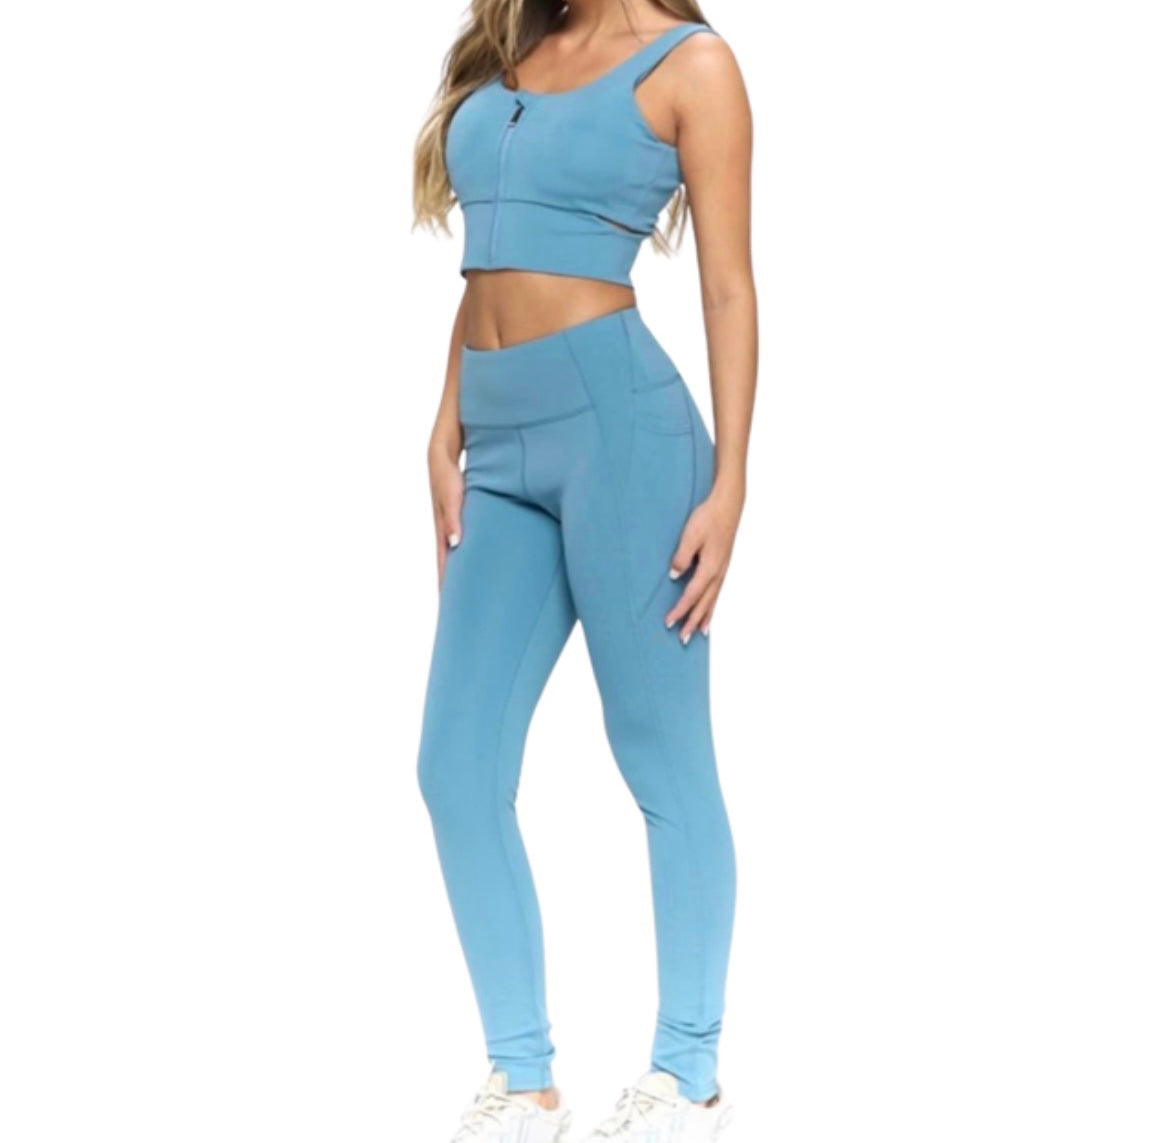 Sports bra and Legging Set - Blue